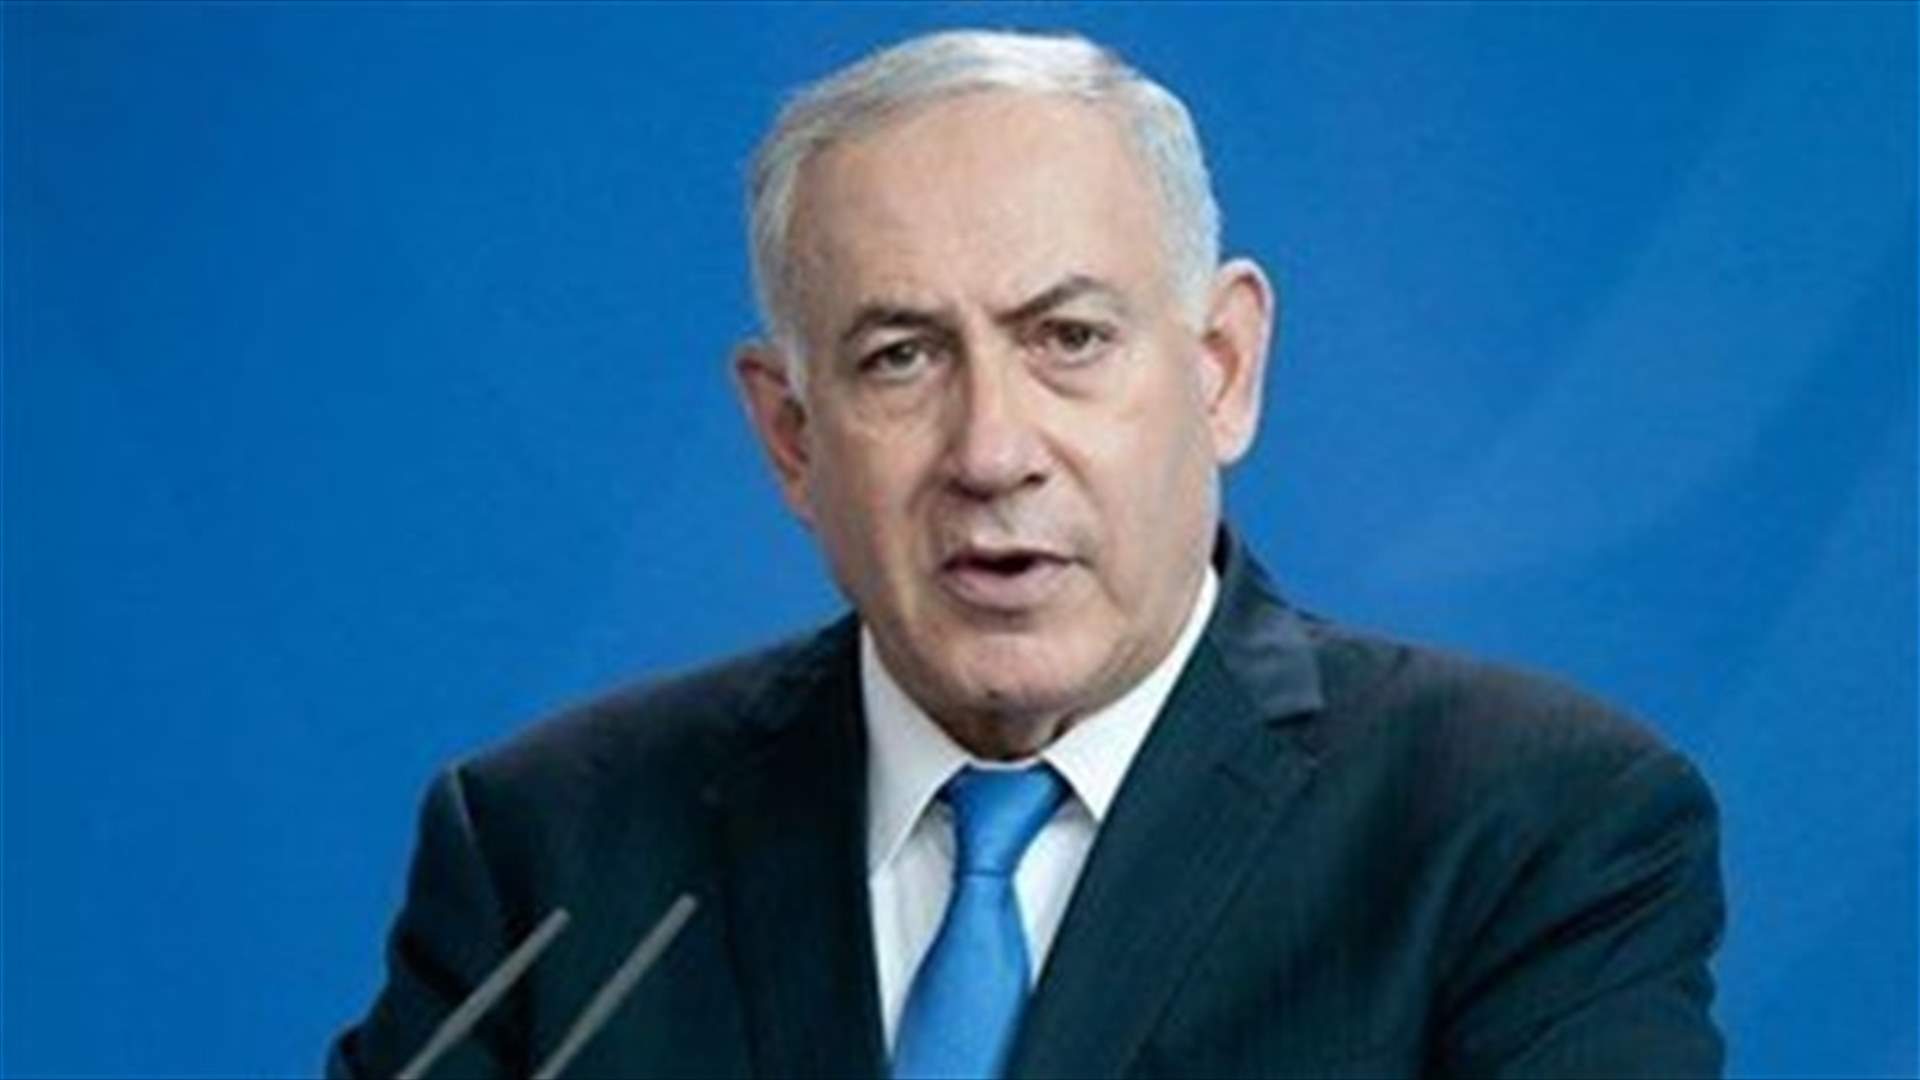 Netanyahu aide has coronavirus but PM exposure unlikely, officials say